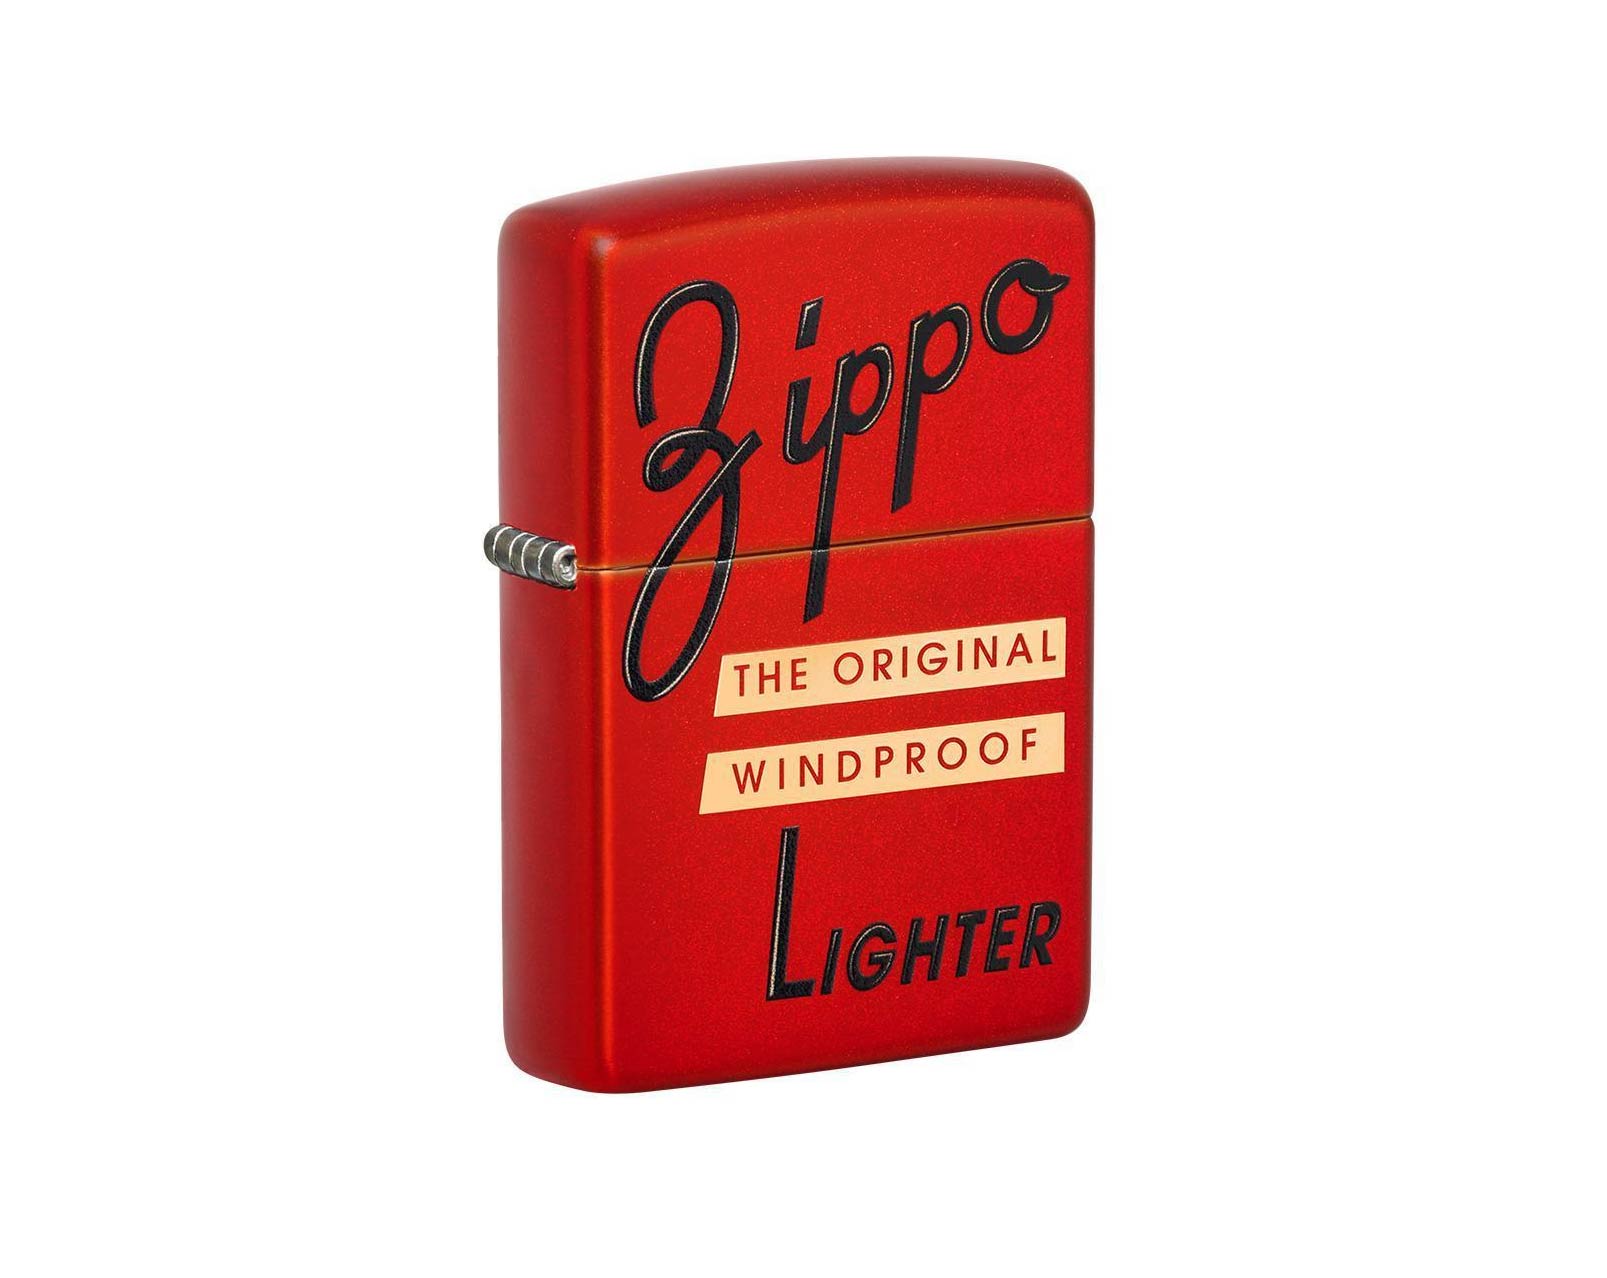 The Zippo Red Box Top Windproof Lighter via @Silodrome